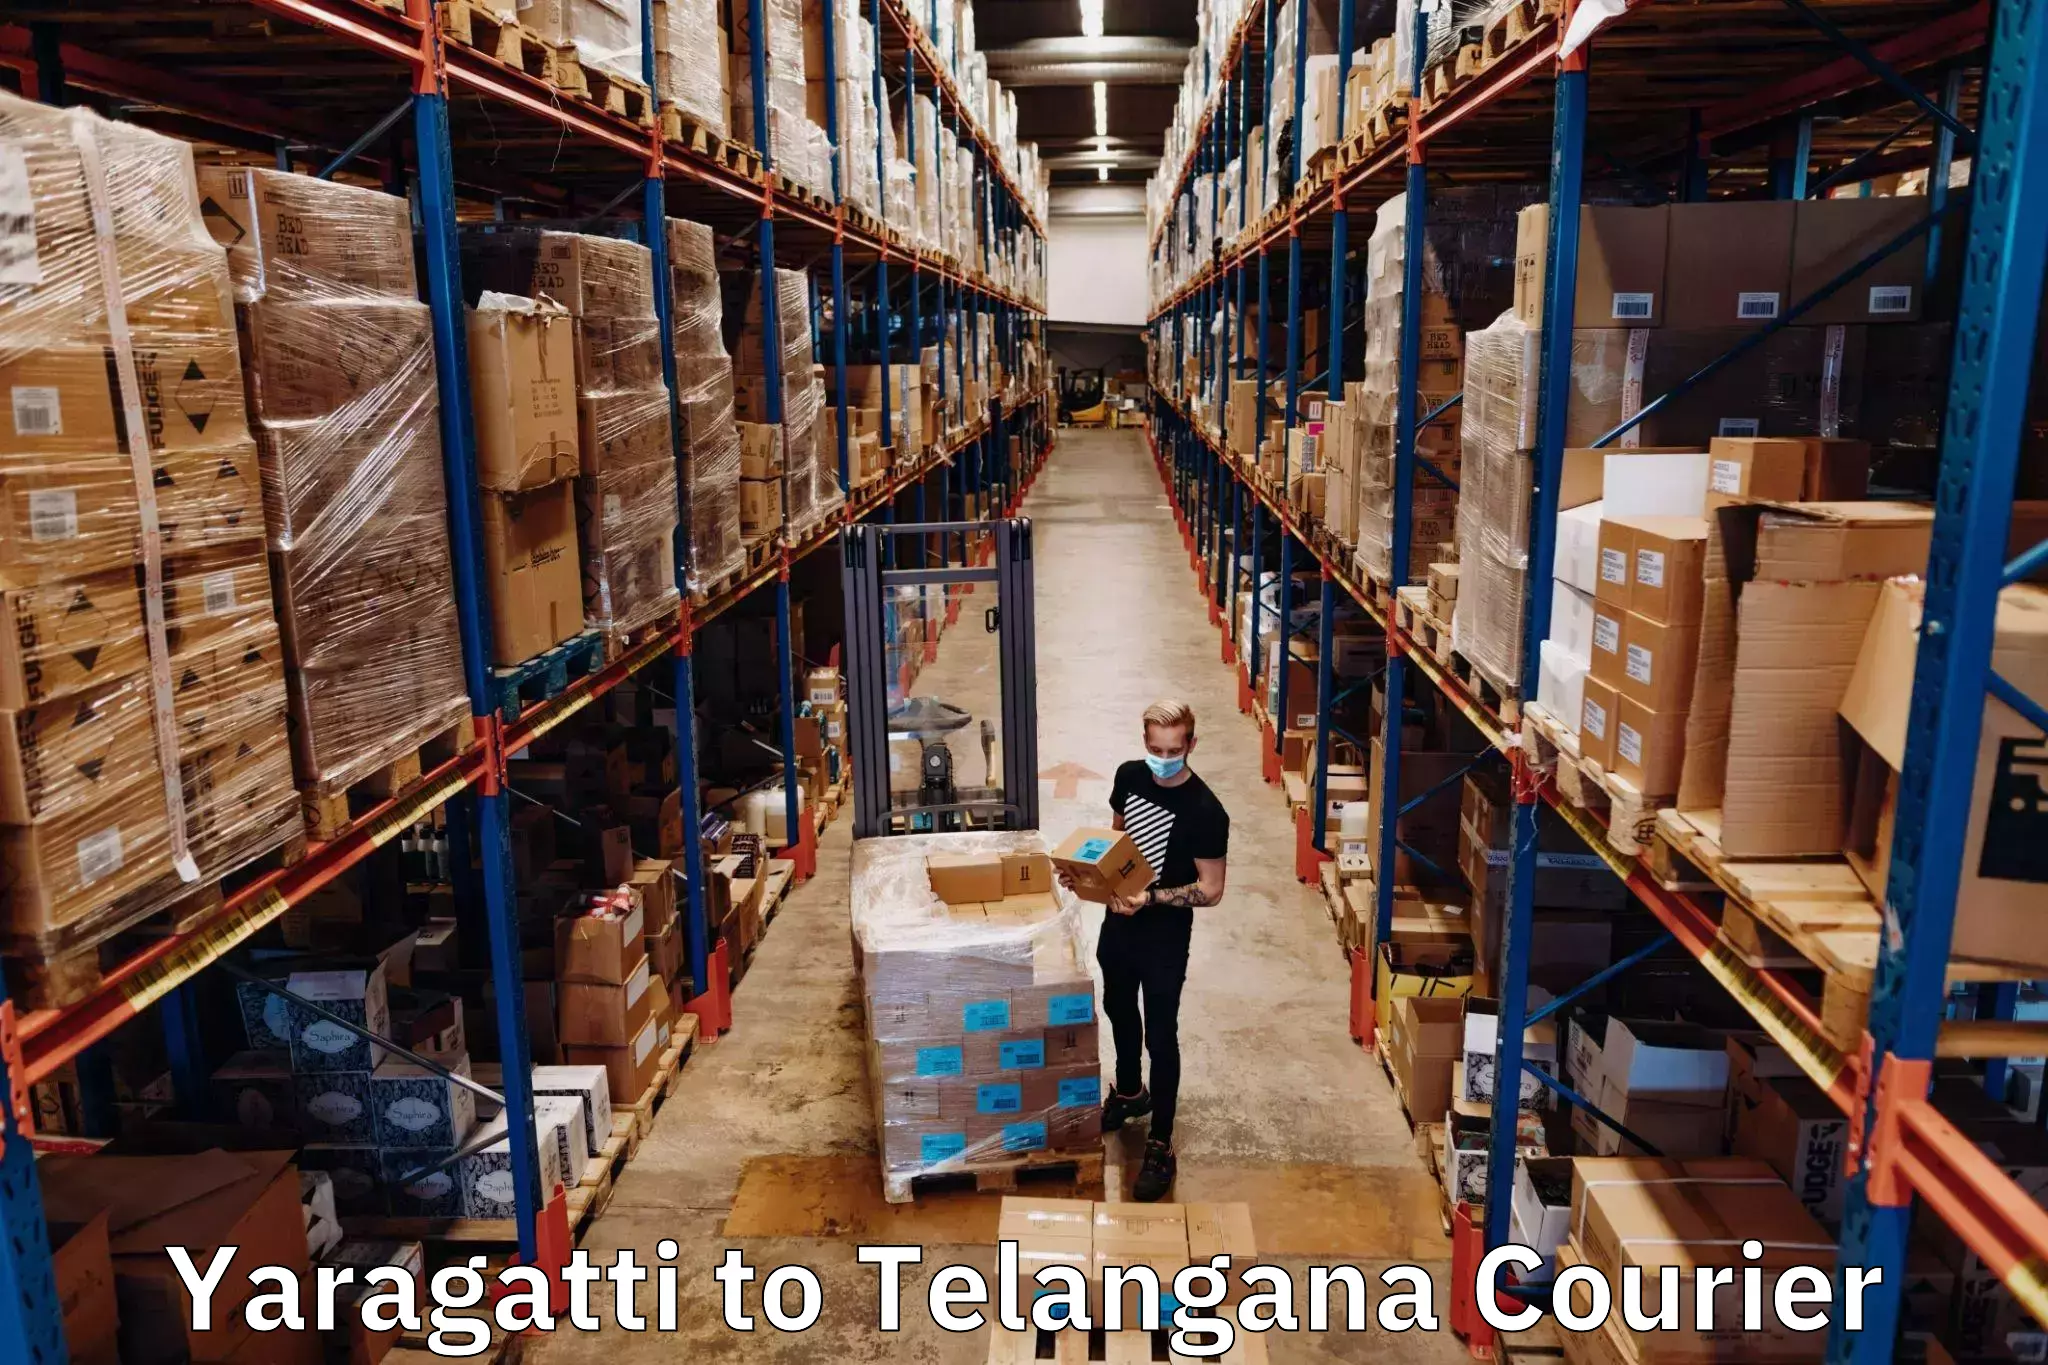 Digital courier platforms Yaragatti to Mahabubnagar